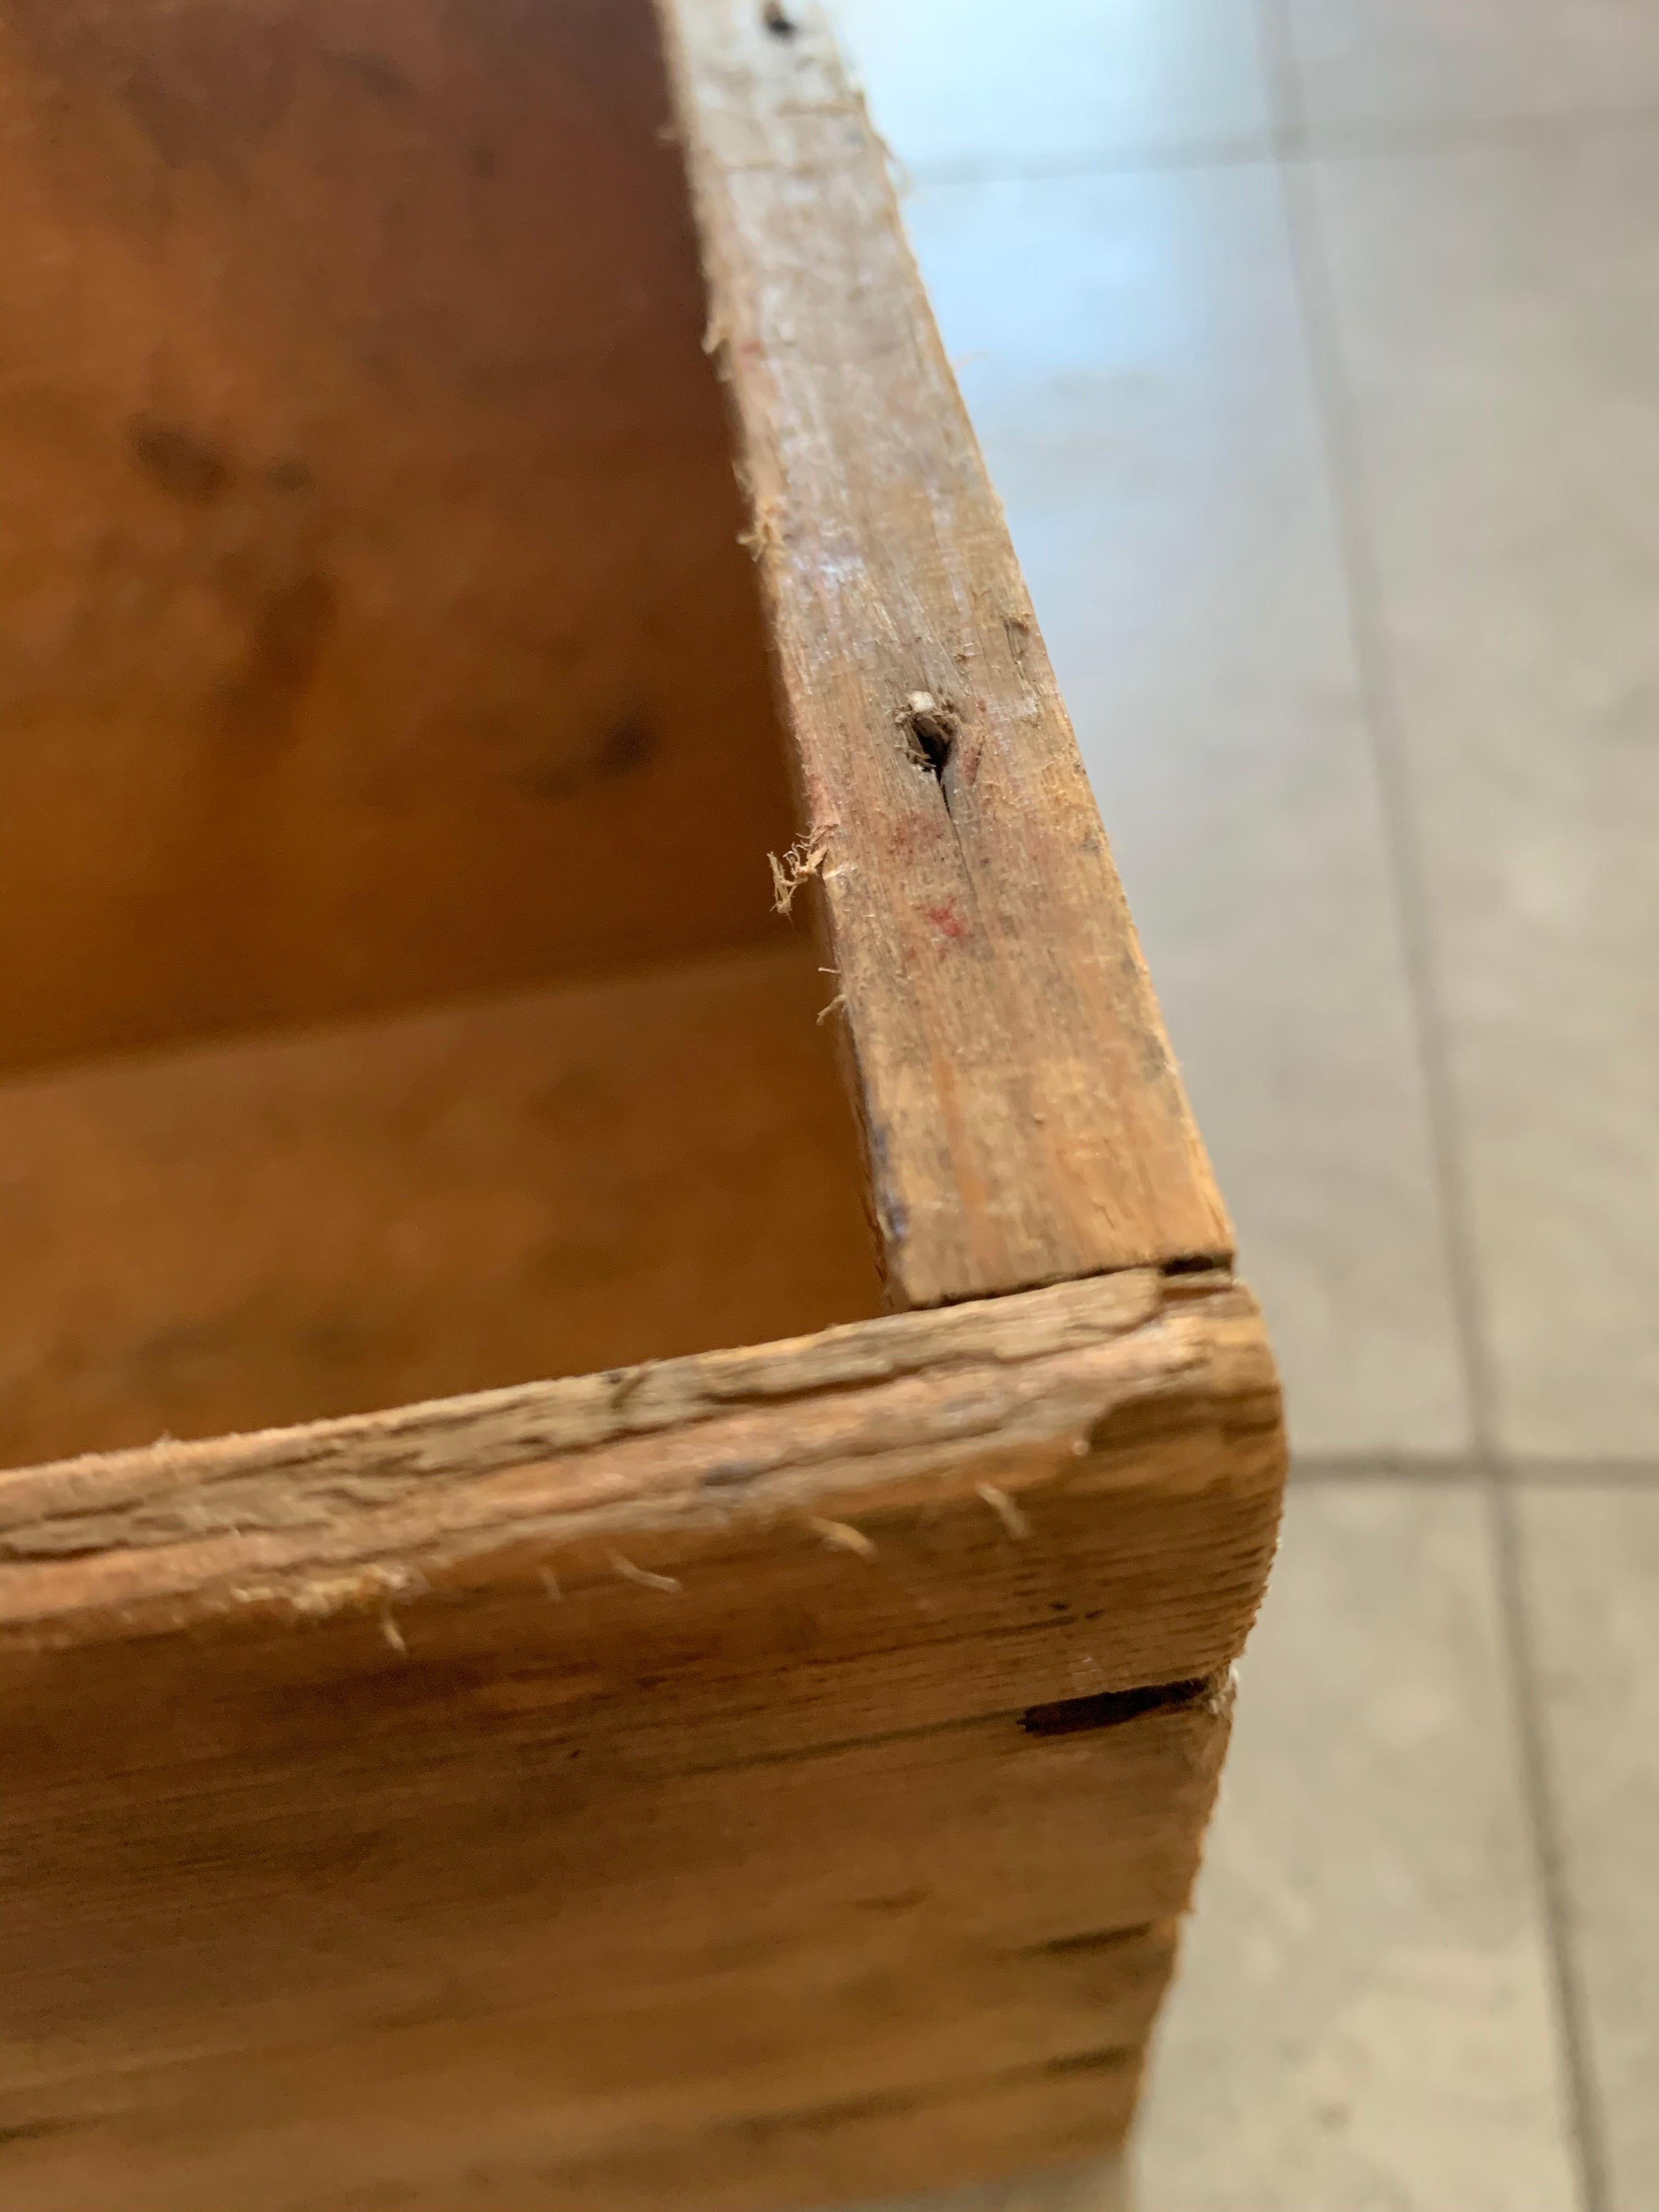 Vintage  Plywood “Danmark” Box